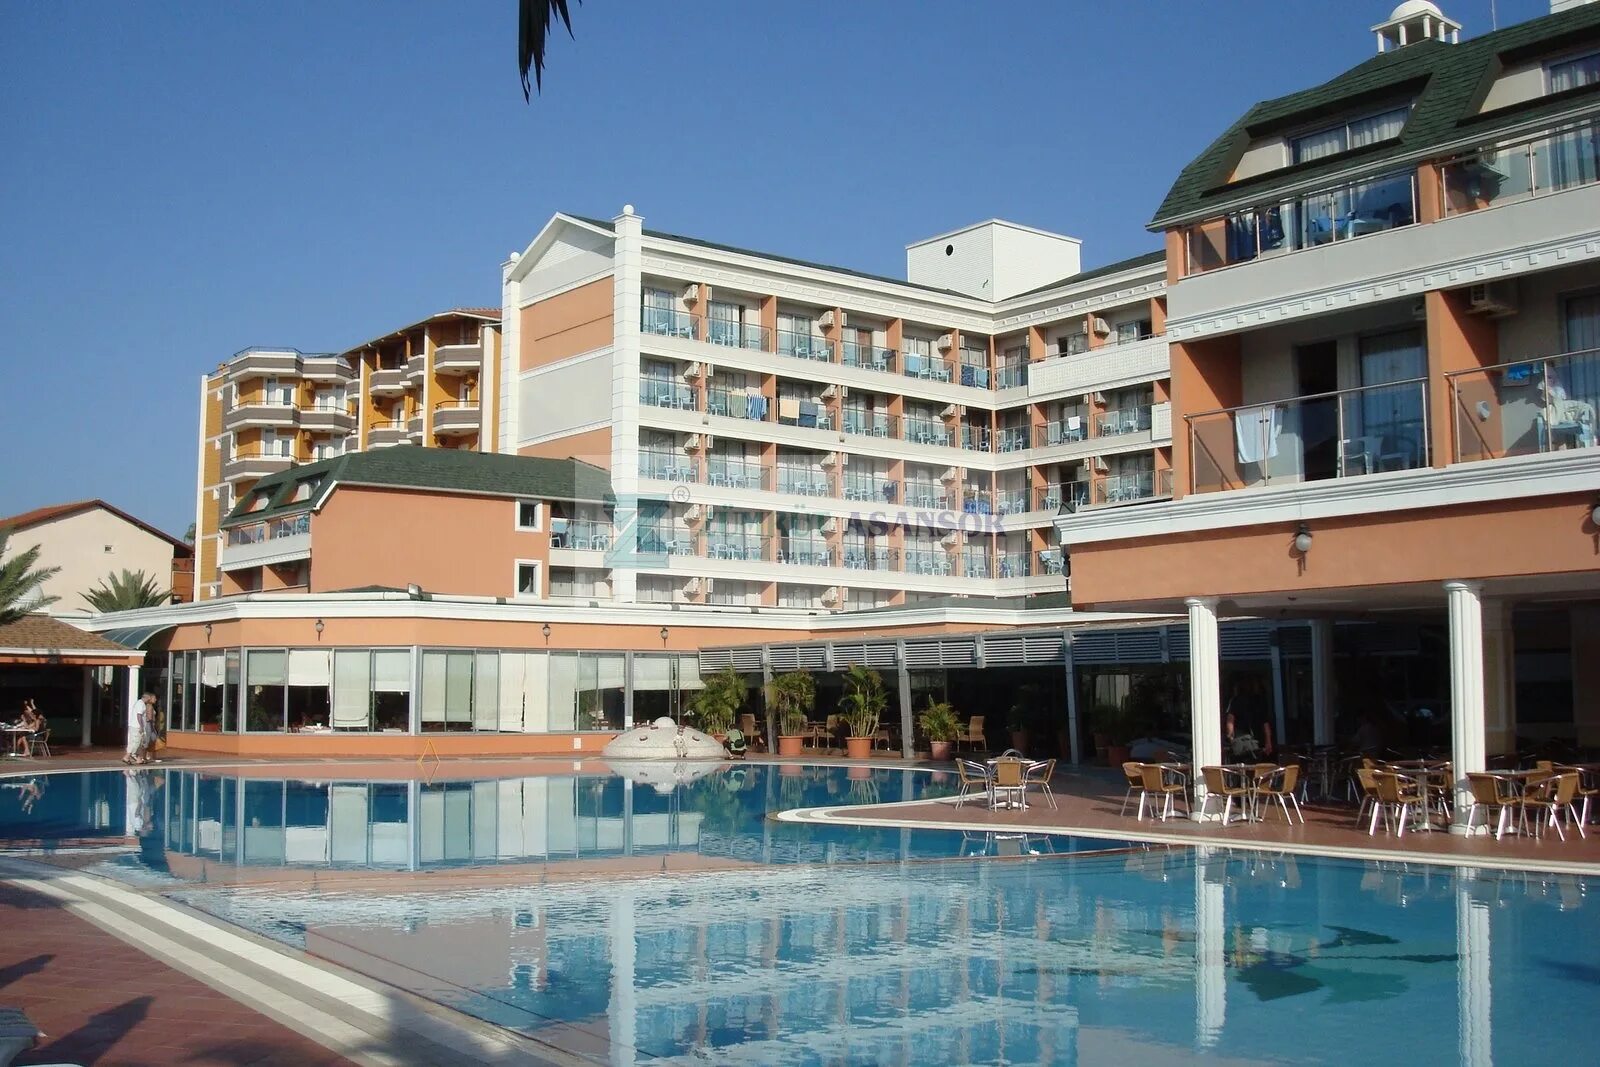 Insula Resort & Spa. Аланья / Alanya Insula Resort Hotel 5*. Инсула парк Резорт. Инсула Резорт Пегас.